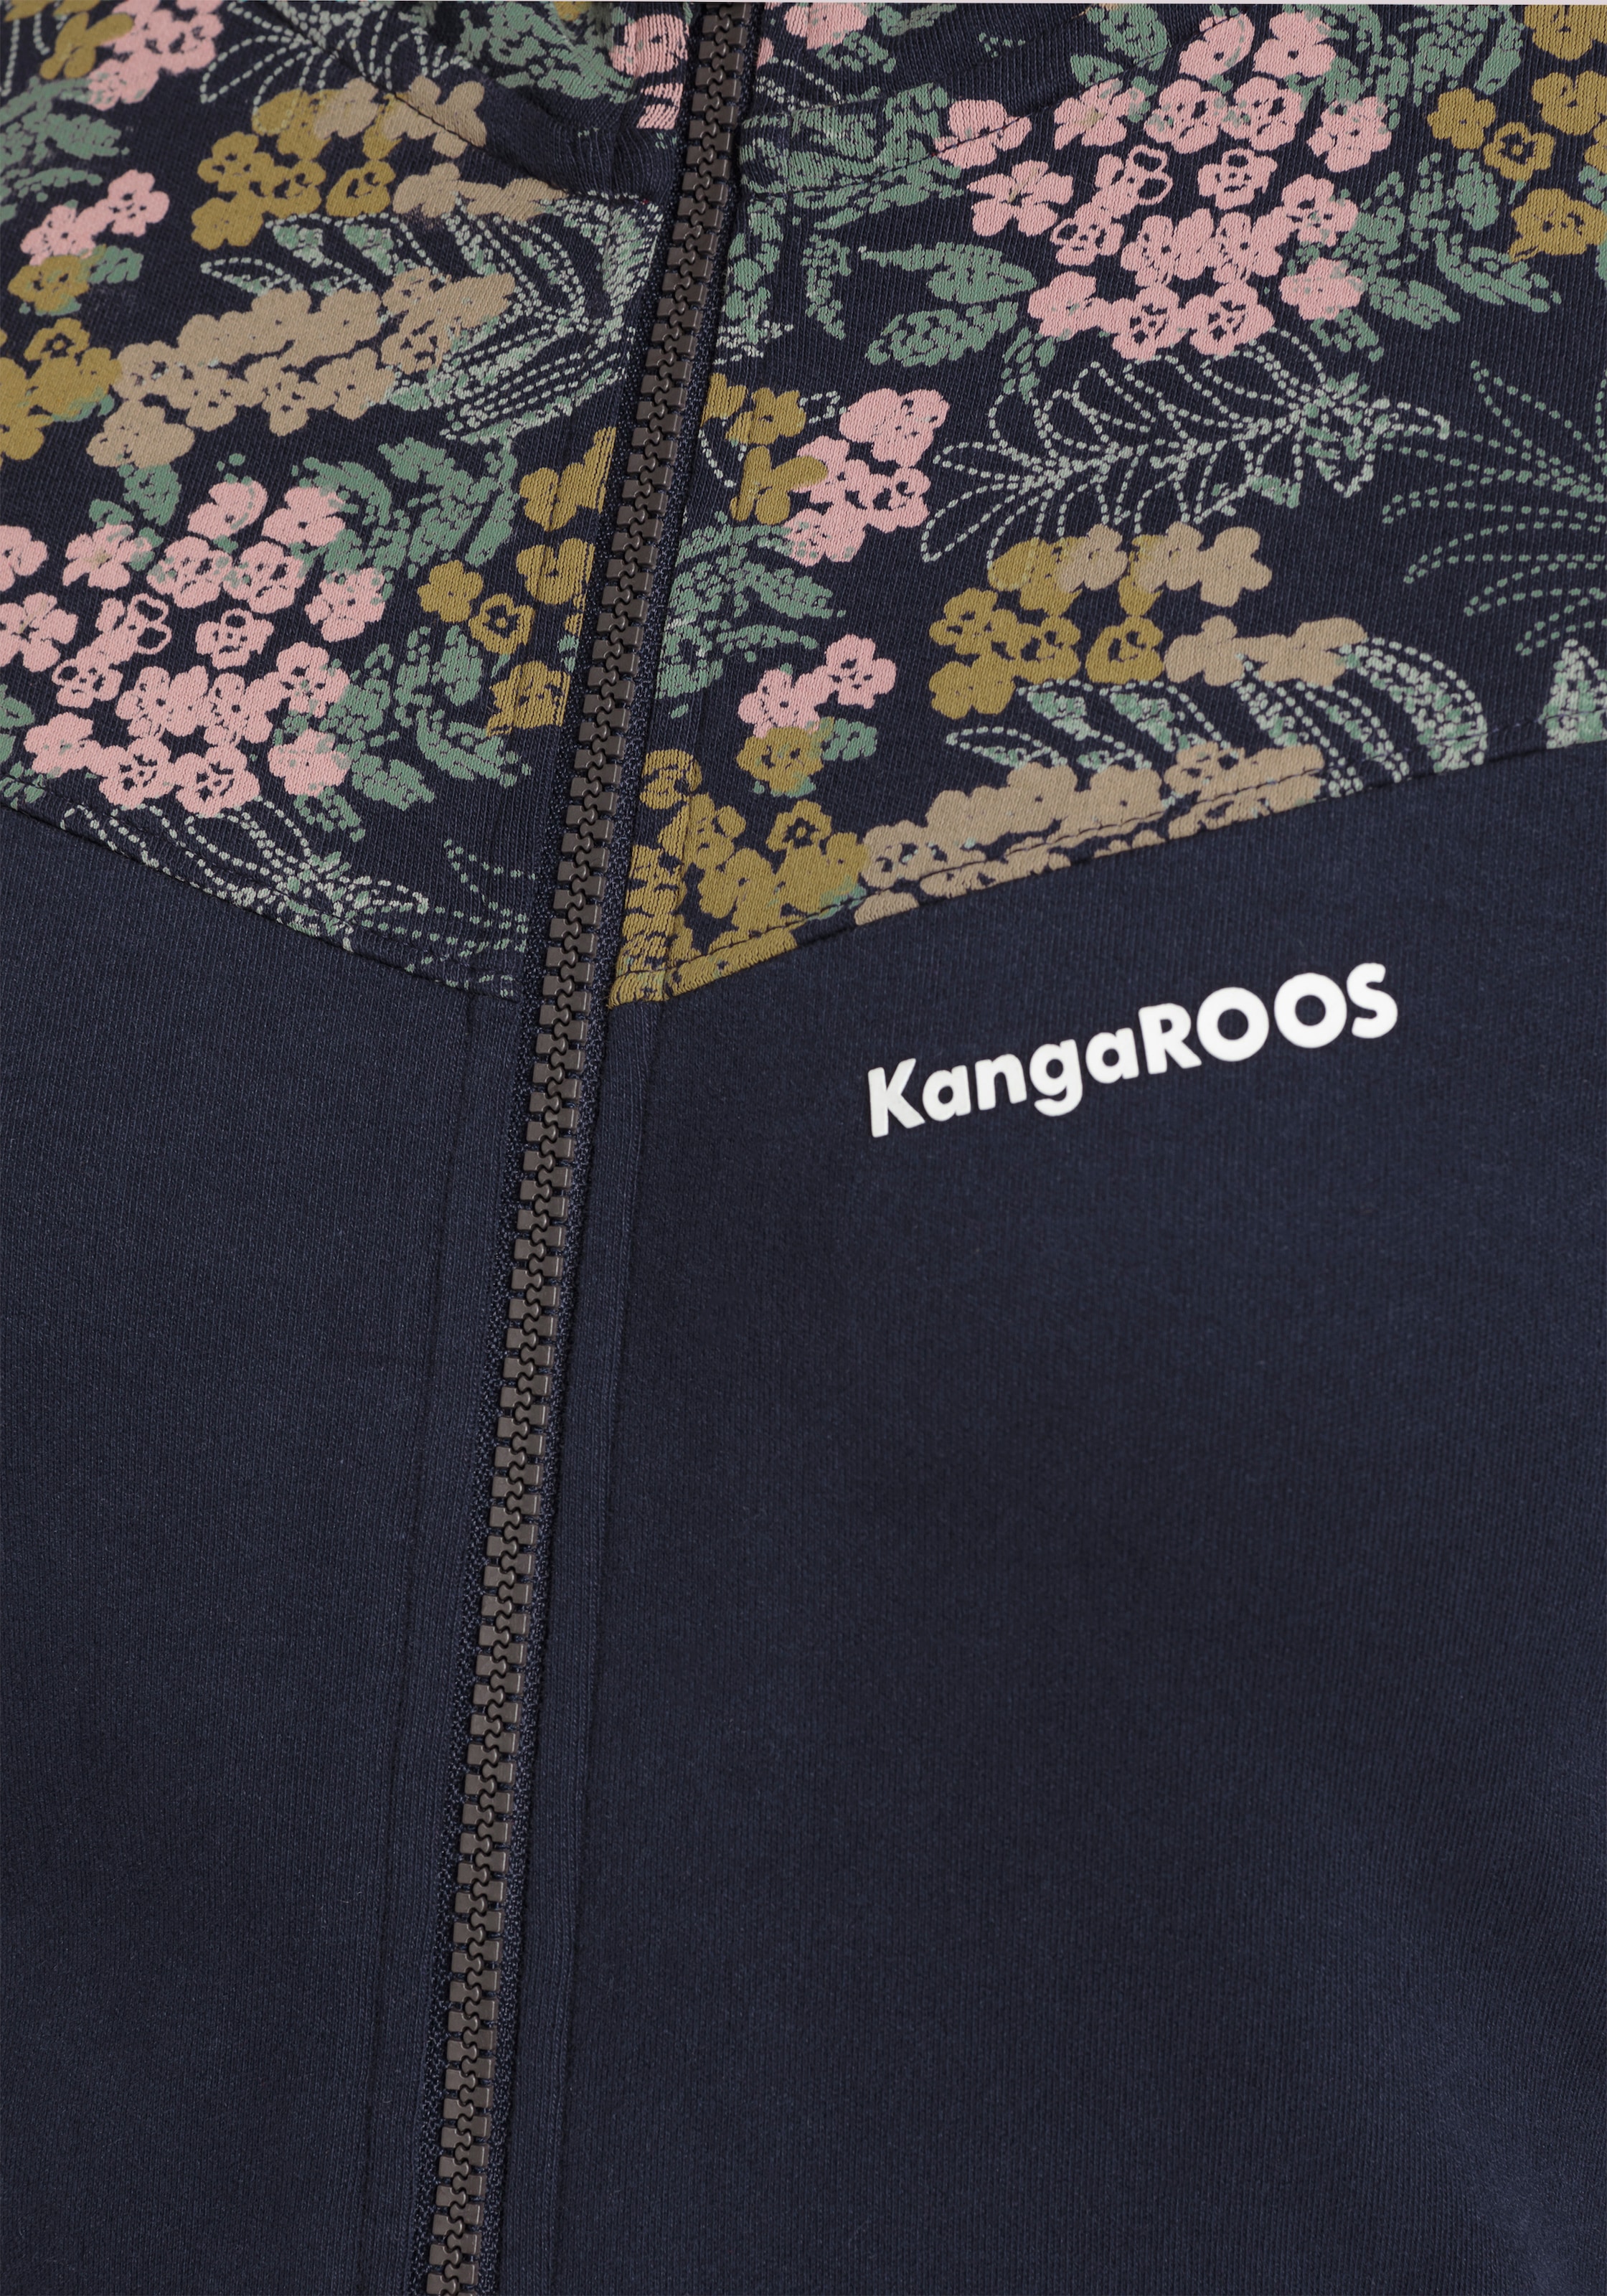 KangaROOS Kapuzensweatjacke, Blumen kaufen Alloverdruck-NEUE-KOLLEKTION BAUR mit 